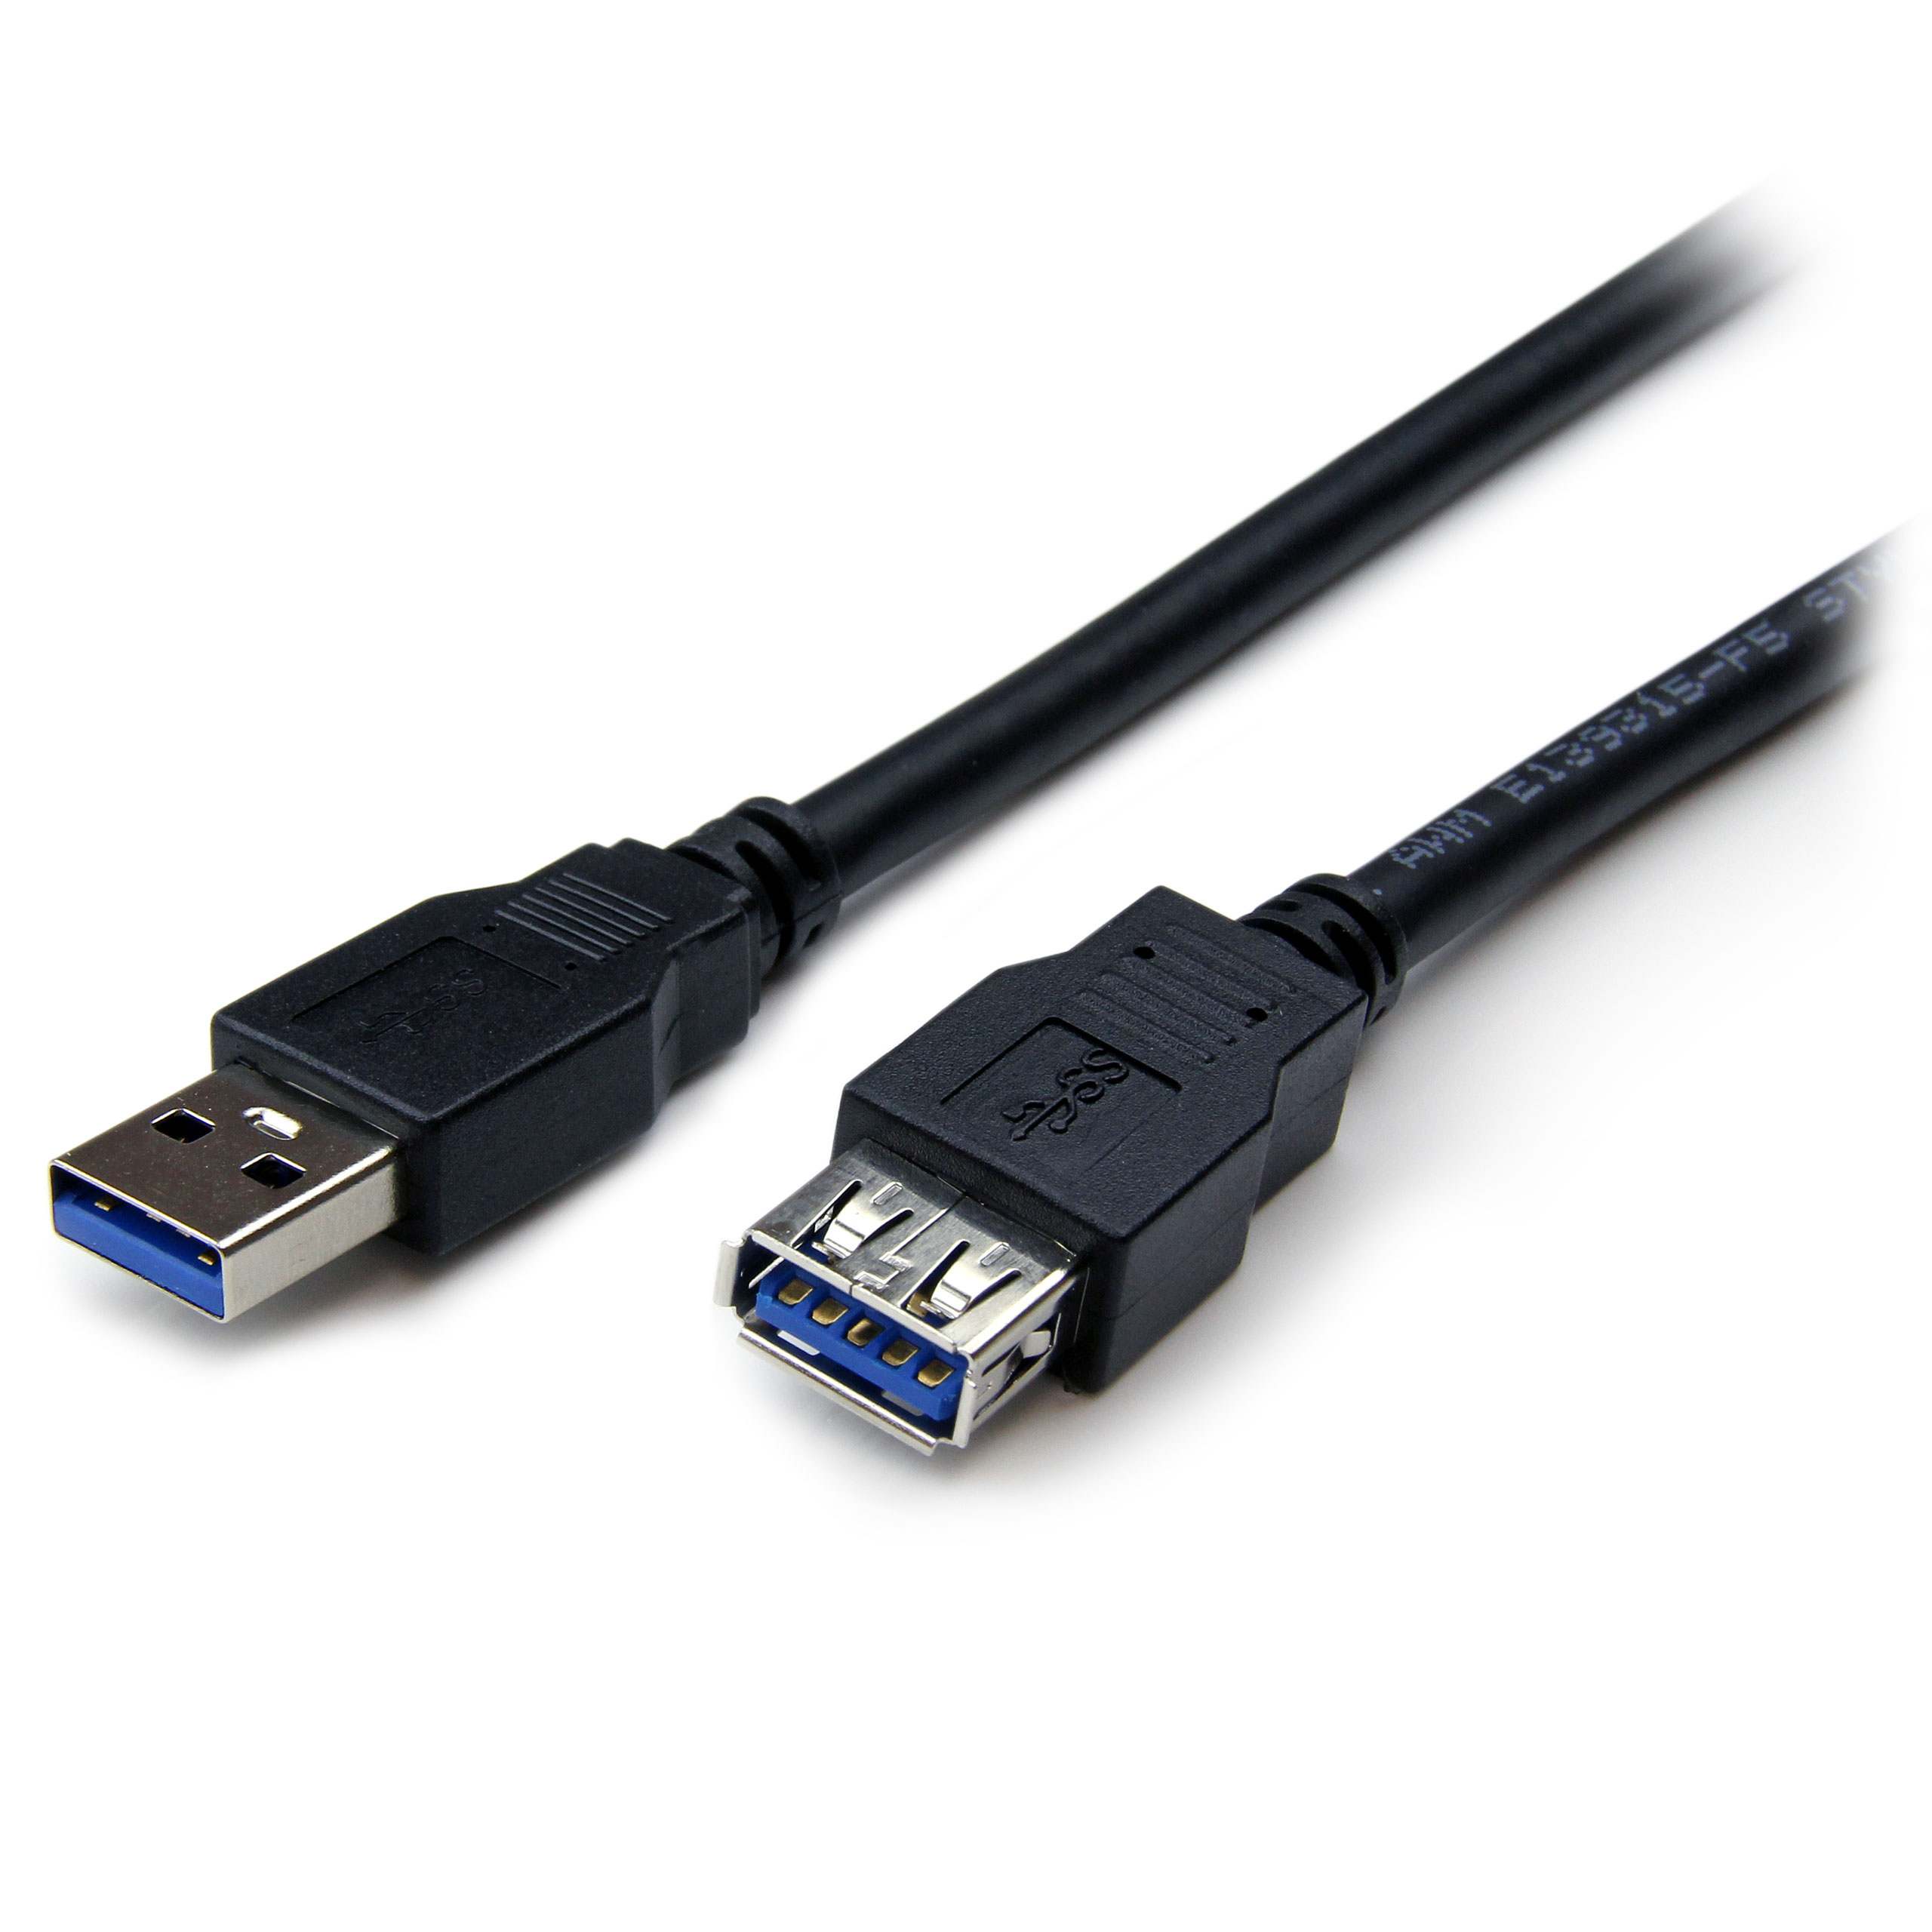 Usb 2.0 usb 3.2 gen1. Кабель USB 3.0 SUPERSPEED USB 3.0 19 Pin. Удлинитель юсб 3.0. Cable USB to USB 2.0 1.5M удлинитель. Perfeo мультимедийный кабель USB 2.0 A - USB 2.0 А, 1,8 М.